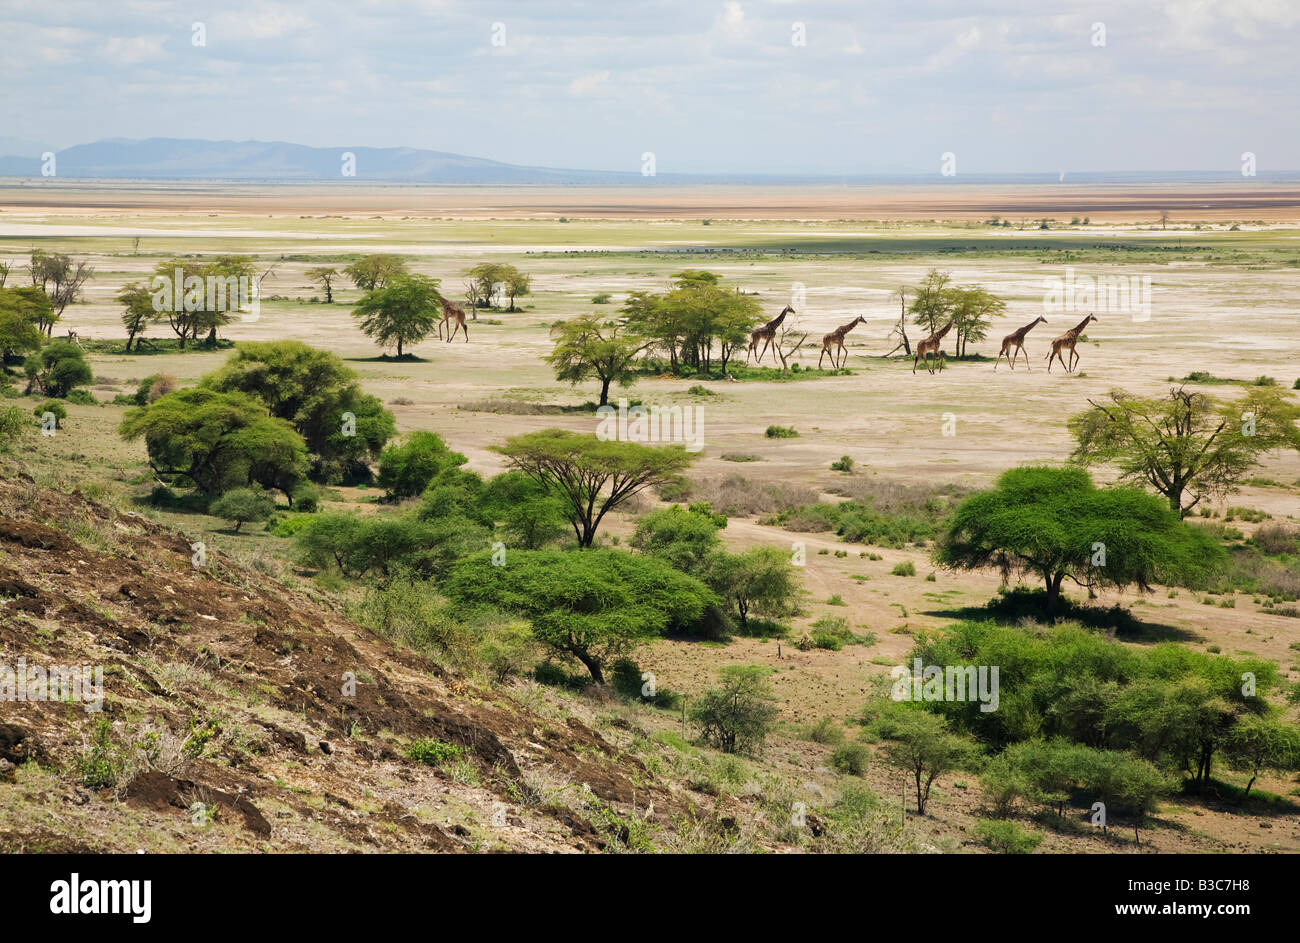 Kenya, Kajiado District, Amboseli National Park. Maasai giraffes move across open country in Amboseli National Park. Stock Photo